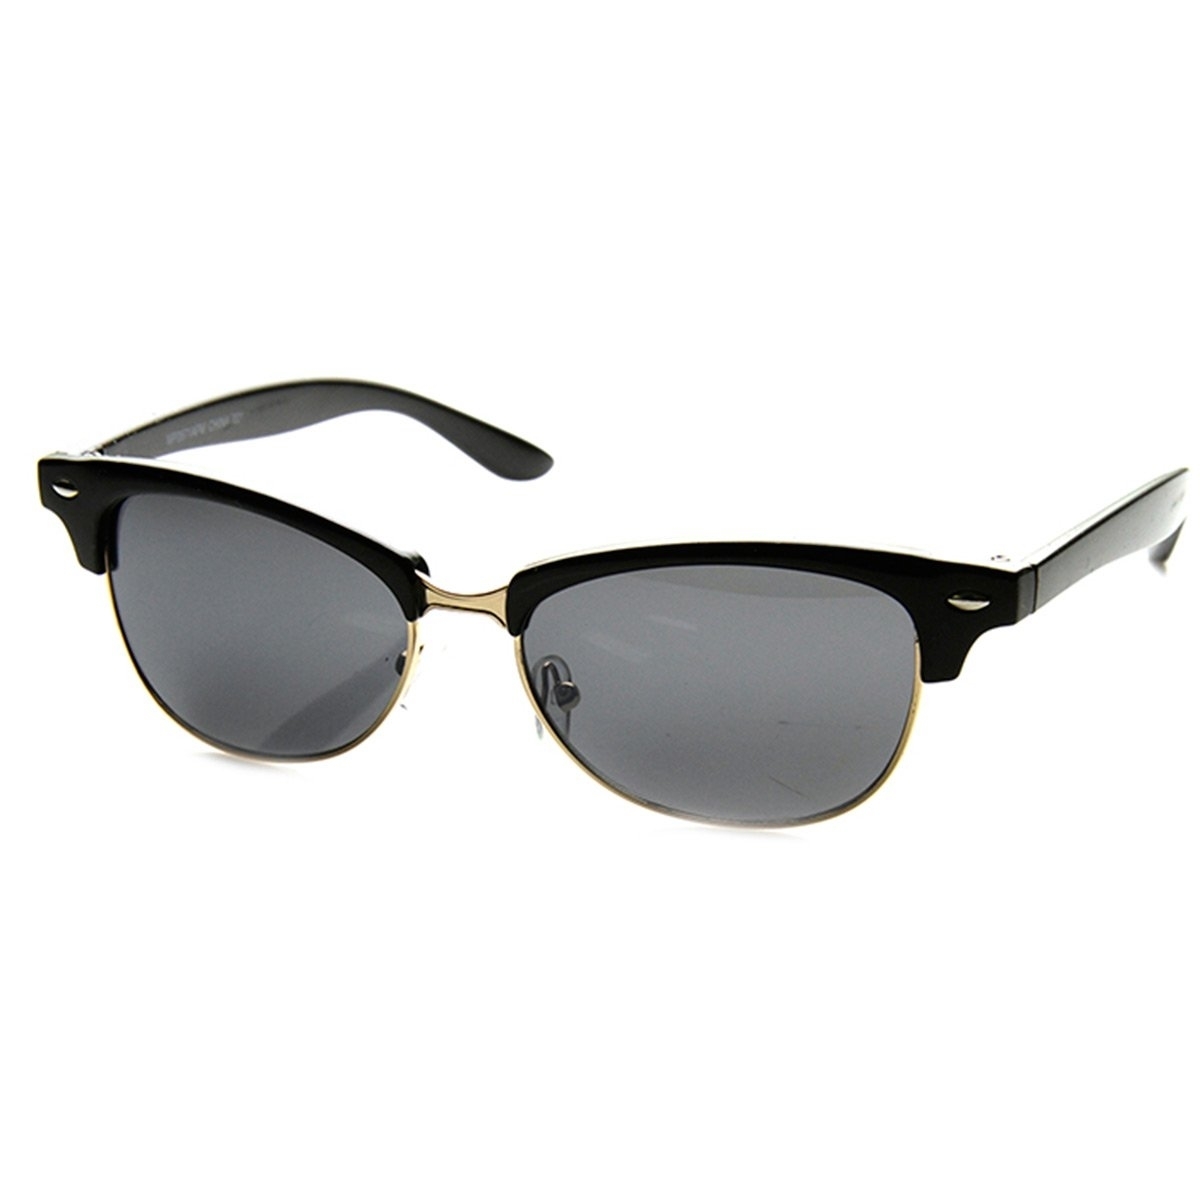 Classic Oval Shaped Semi-Rimless Half Frame Horn Rimmed Sunglasses - Black-Gold Smoke